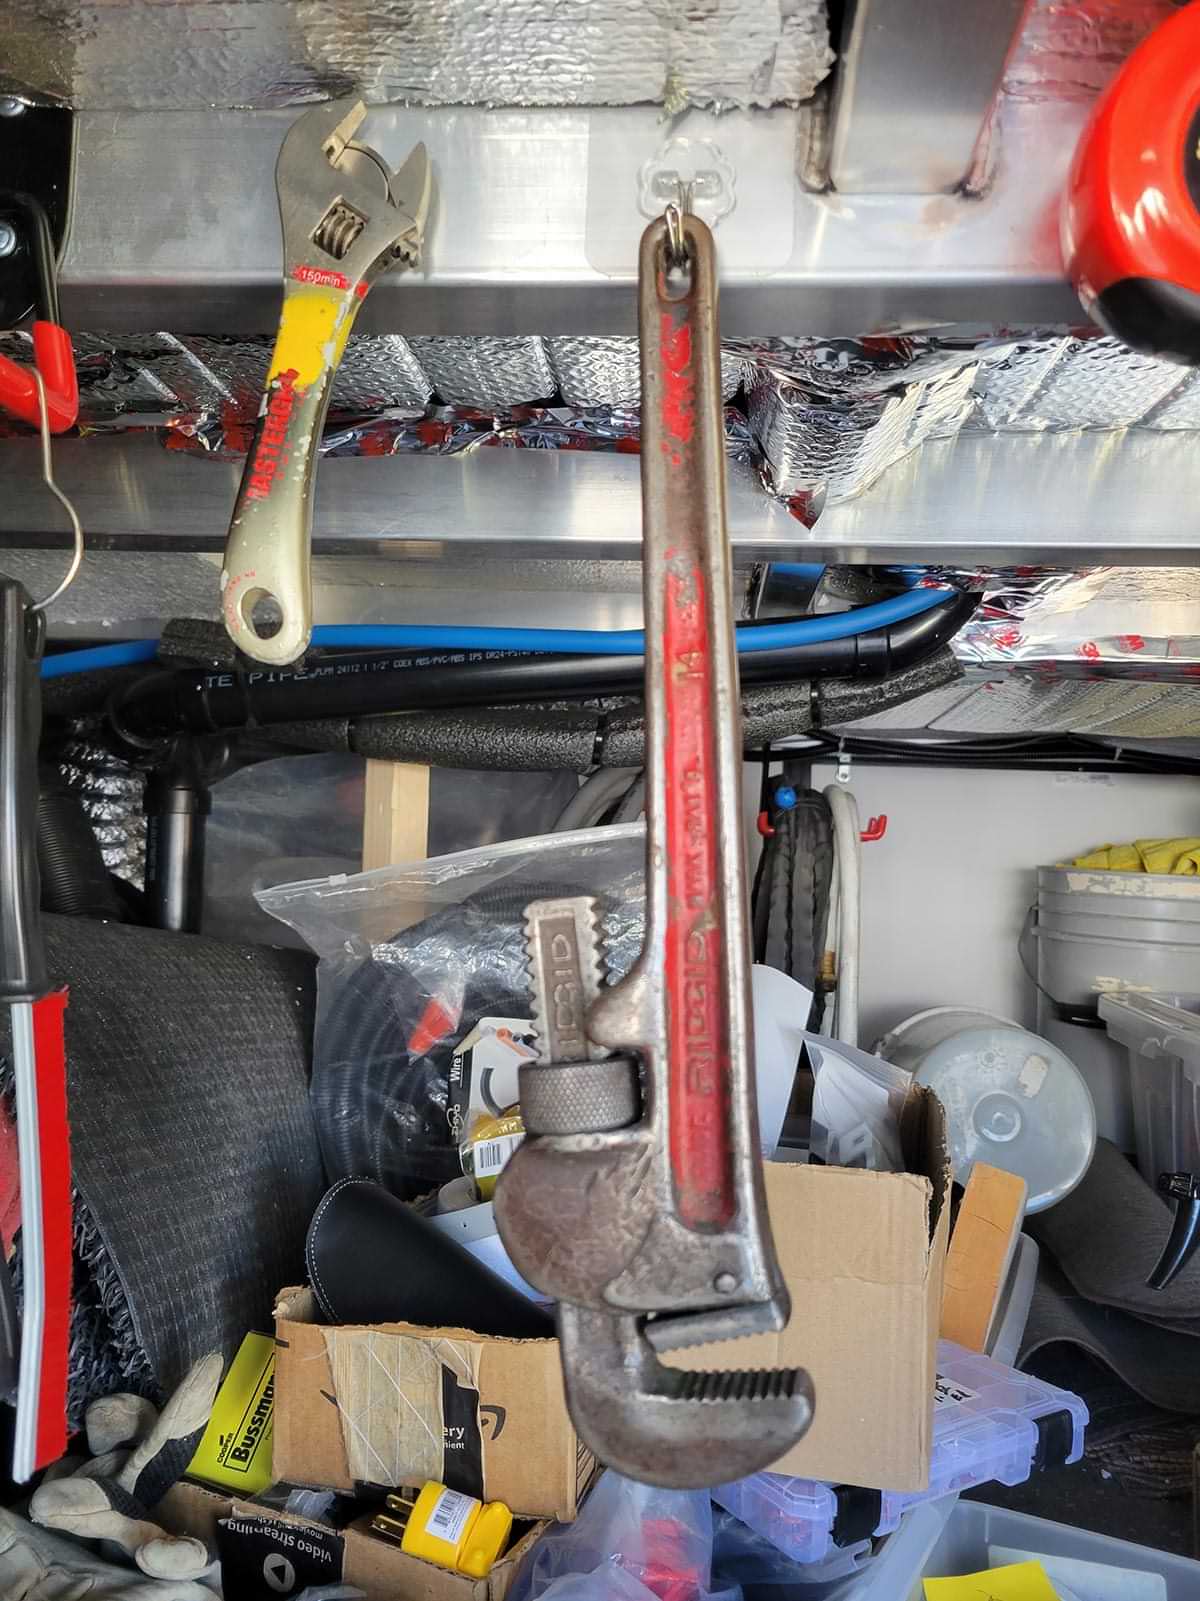 a JelKen hook holds a monkey wrench from an aluminum rafter in an RV external compartment